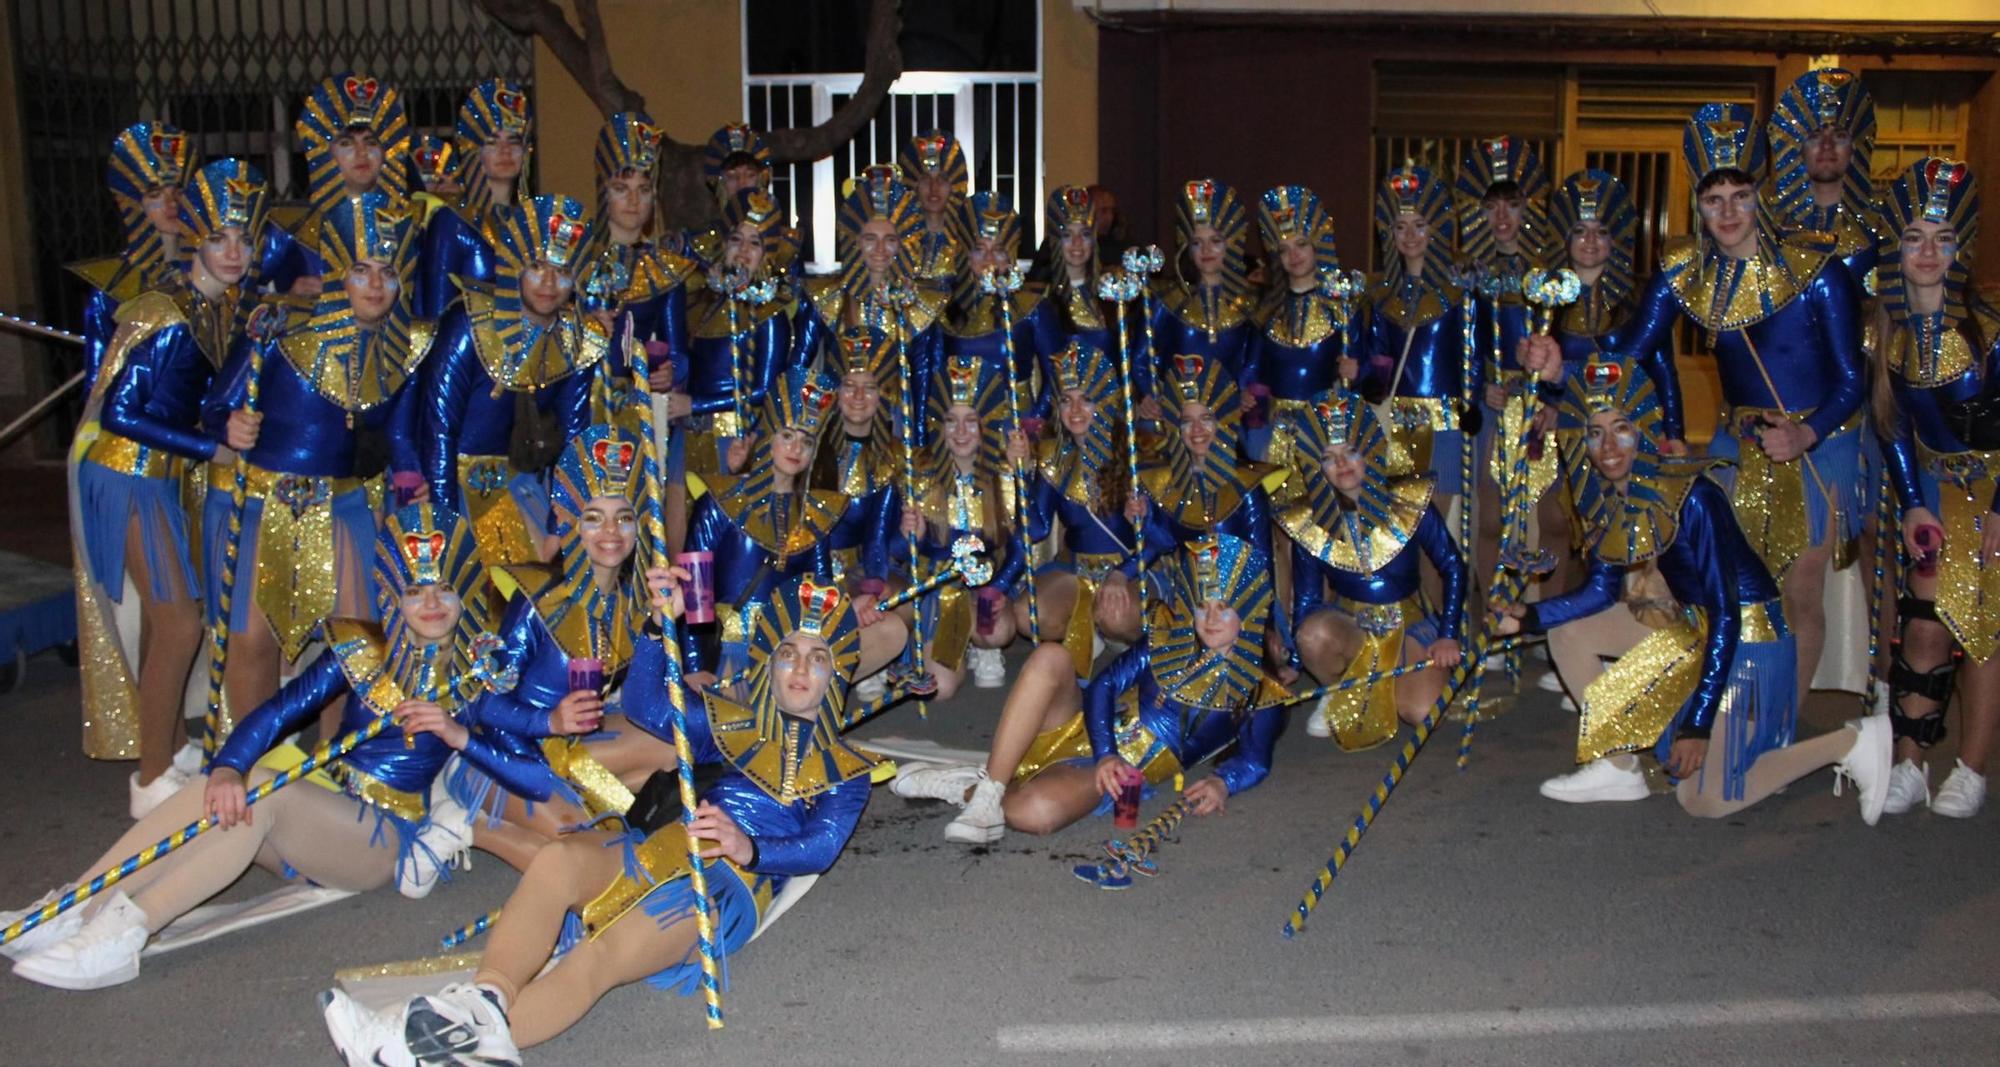 El desfile del Carnaval de Alcalà de Xivert, en imágenes